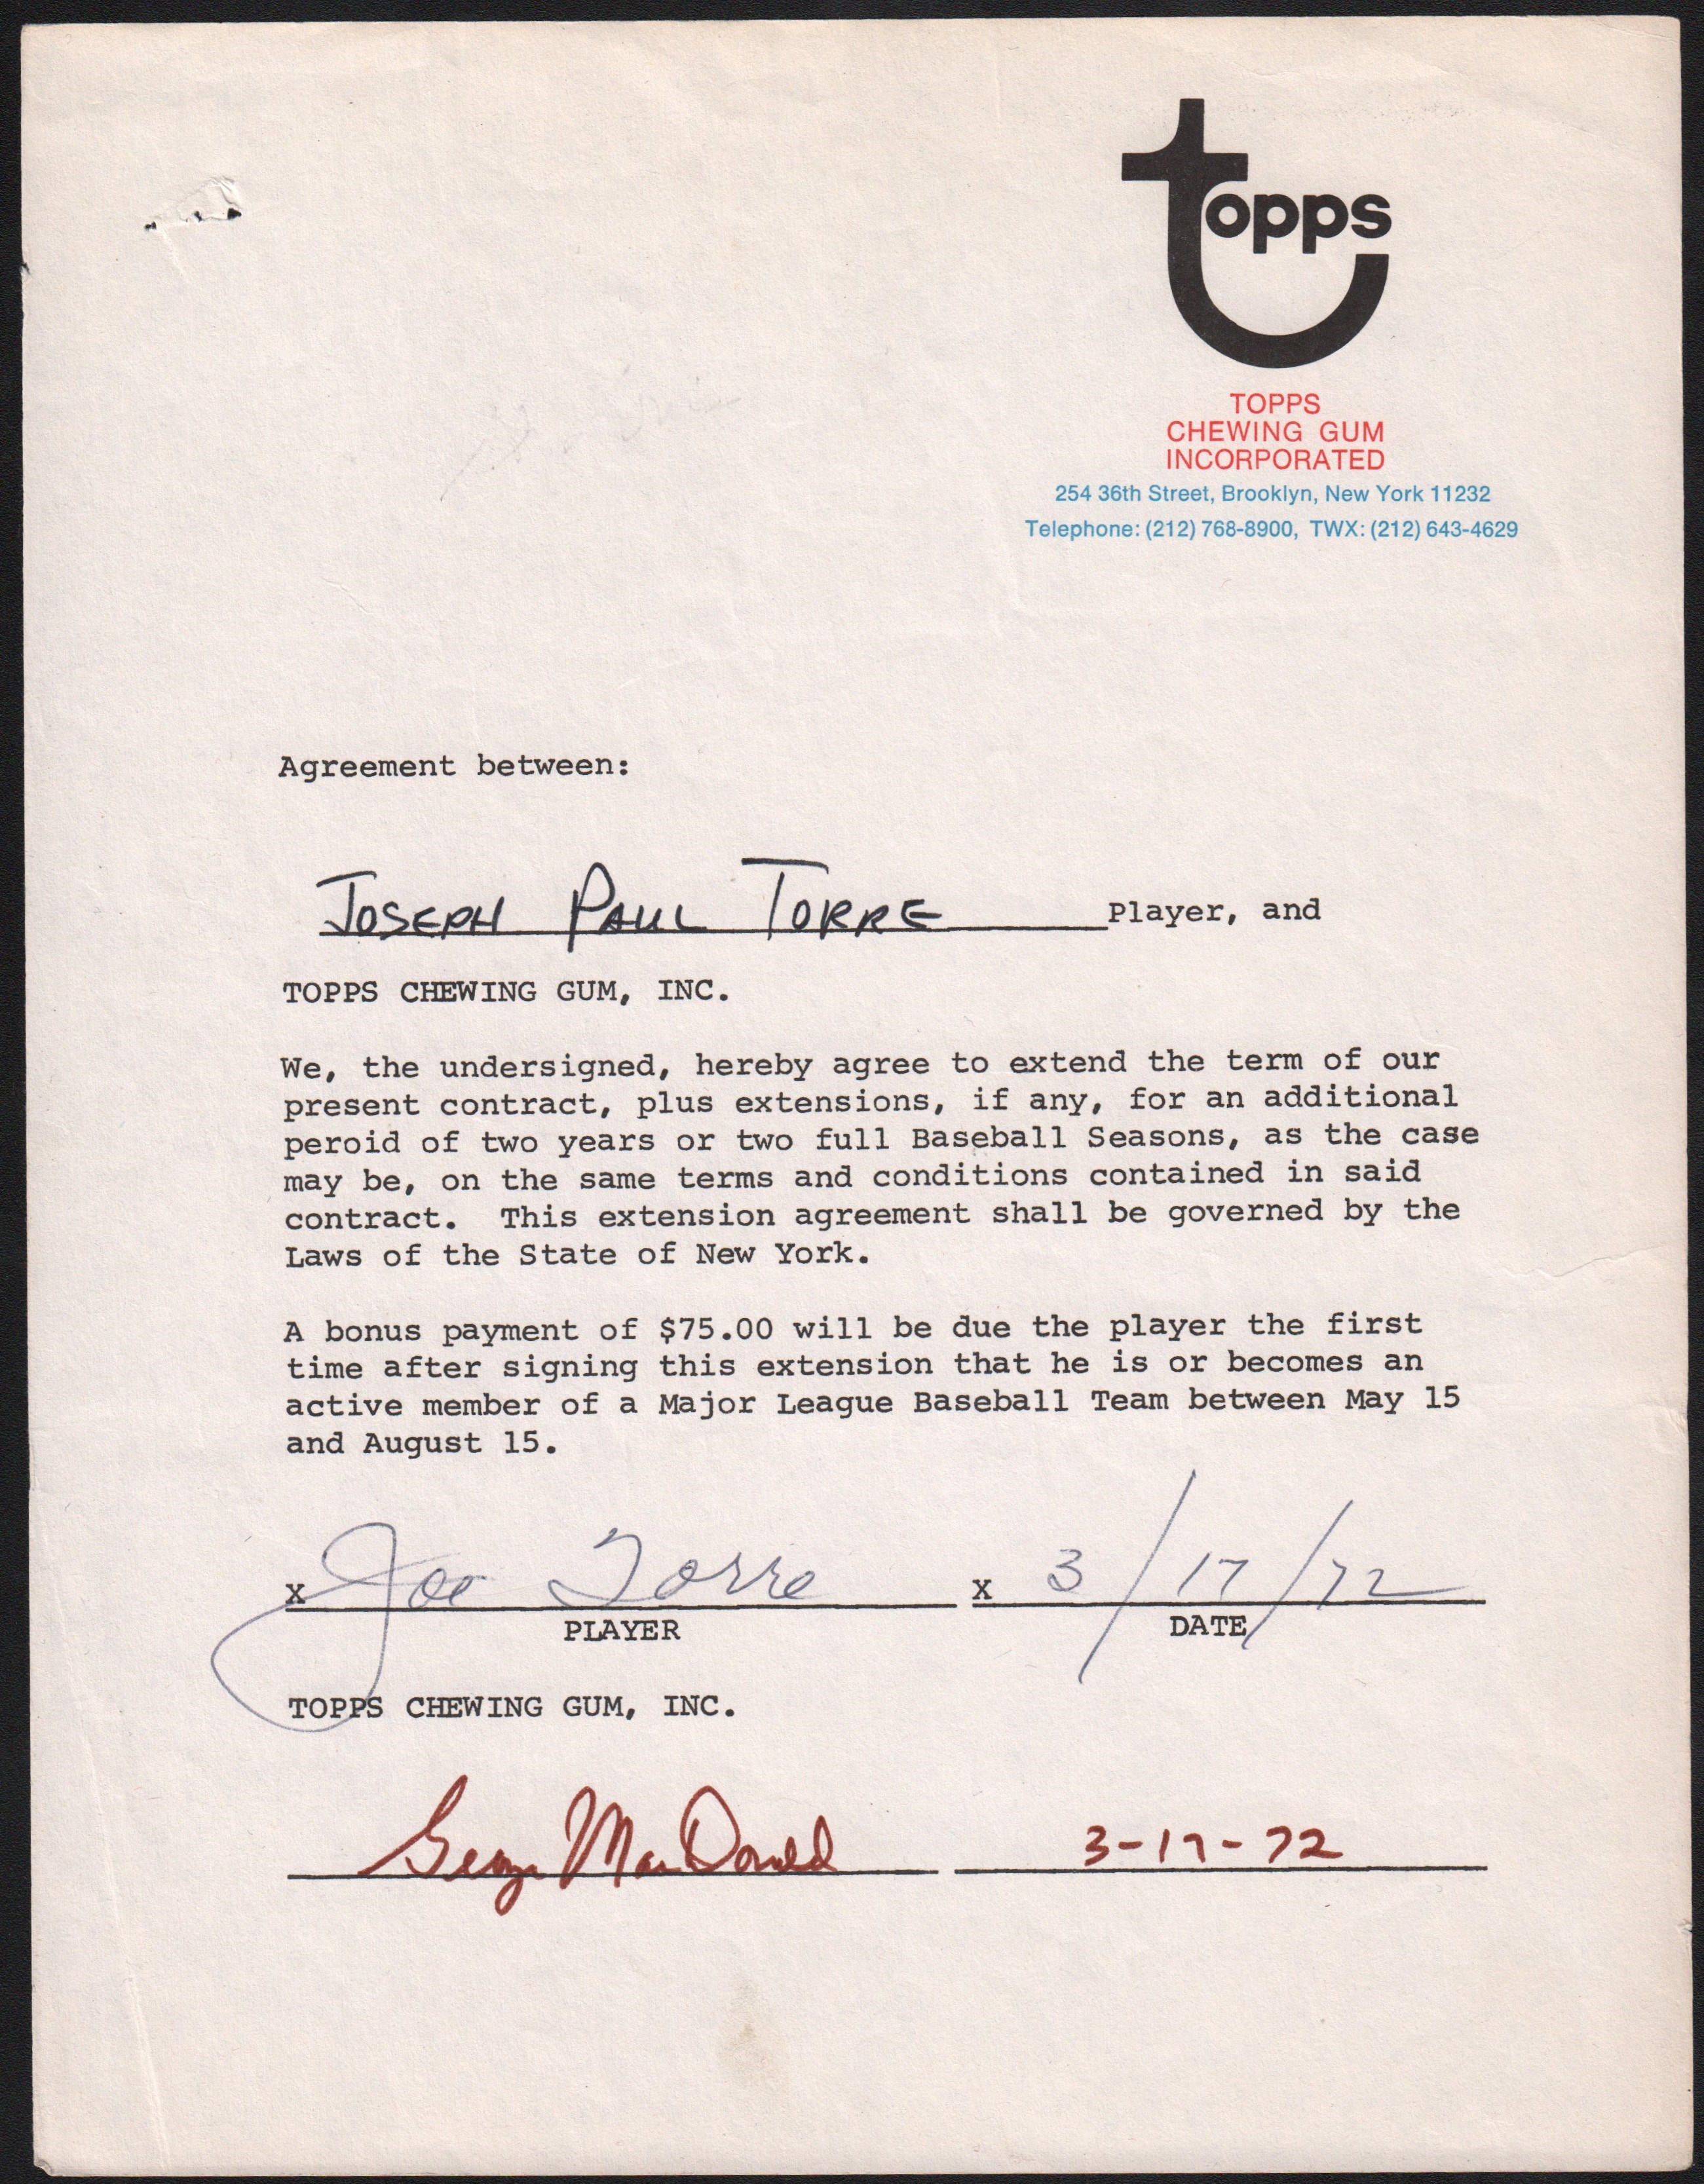 Baseball Autographs - 1972 Joe Torre Topps Gum Baseball Card Contract (HOF)